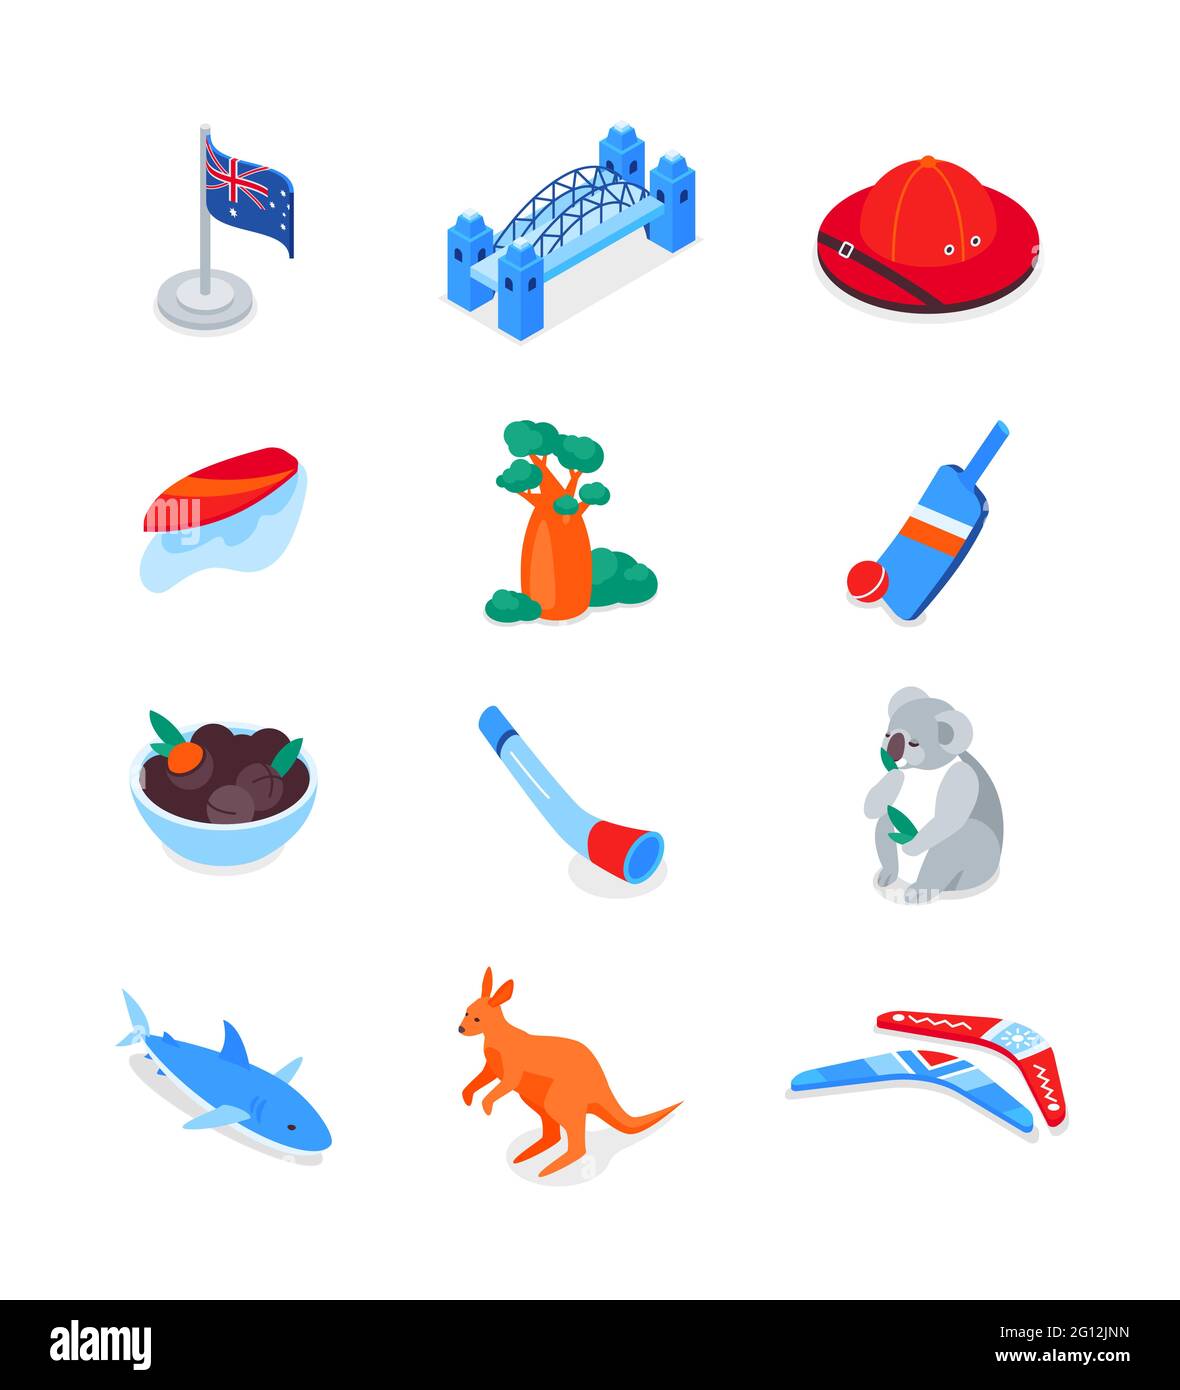 Australische Symbole - modernes, farbenfrohes isometrisches Ikonen-Set. Kultur und Traditionen Australiens. Kangaroo, Koala, Bumerang, Sydney Harbour Bridge, Boab Stock Vektor